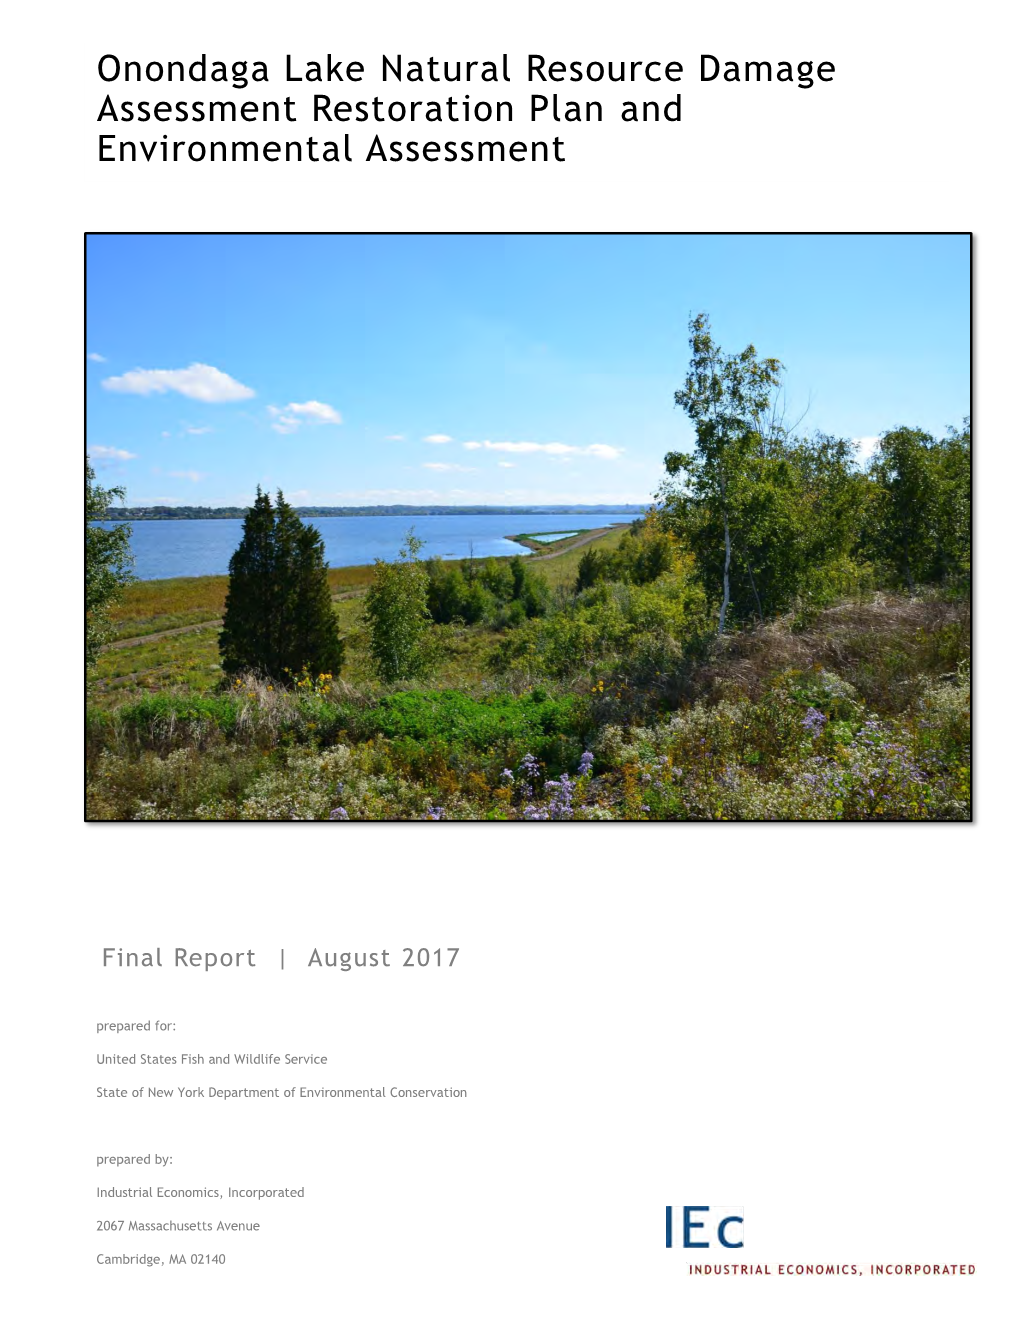 Onondaga Lake Natural Resource Damage Assessment Restoration Plan and Environmental Assessment